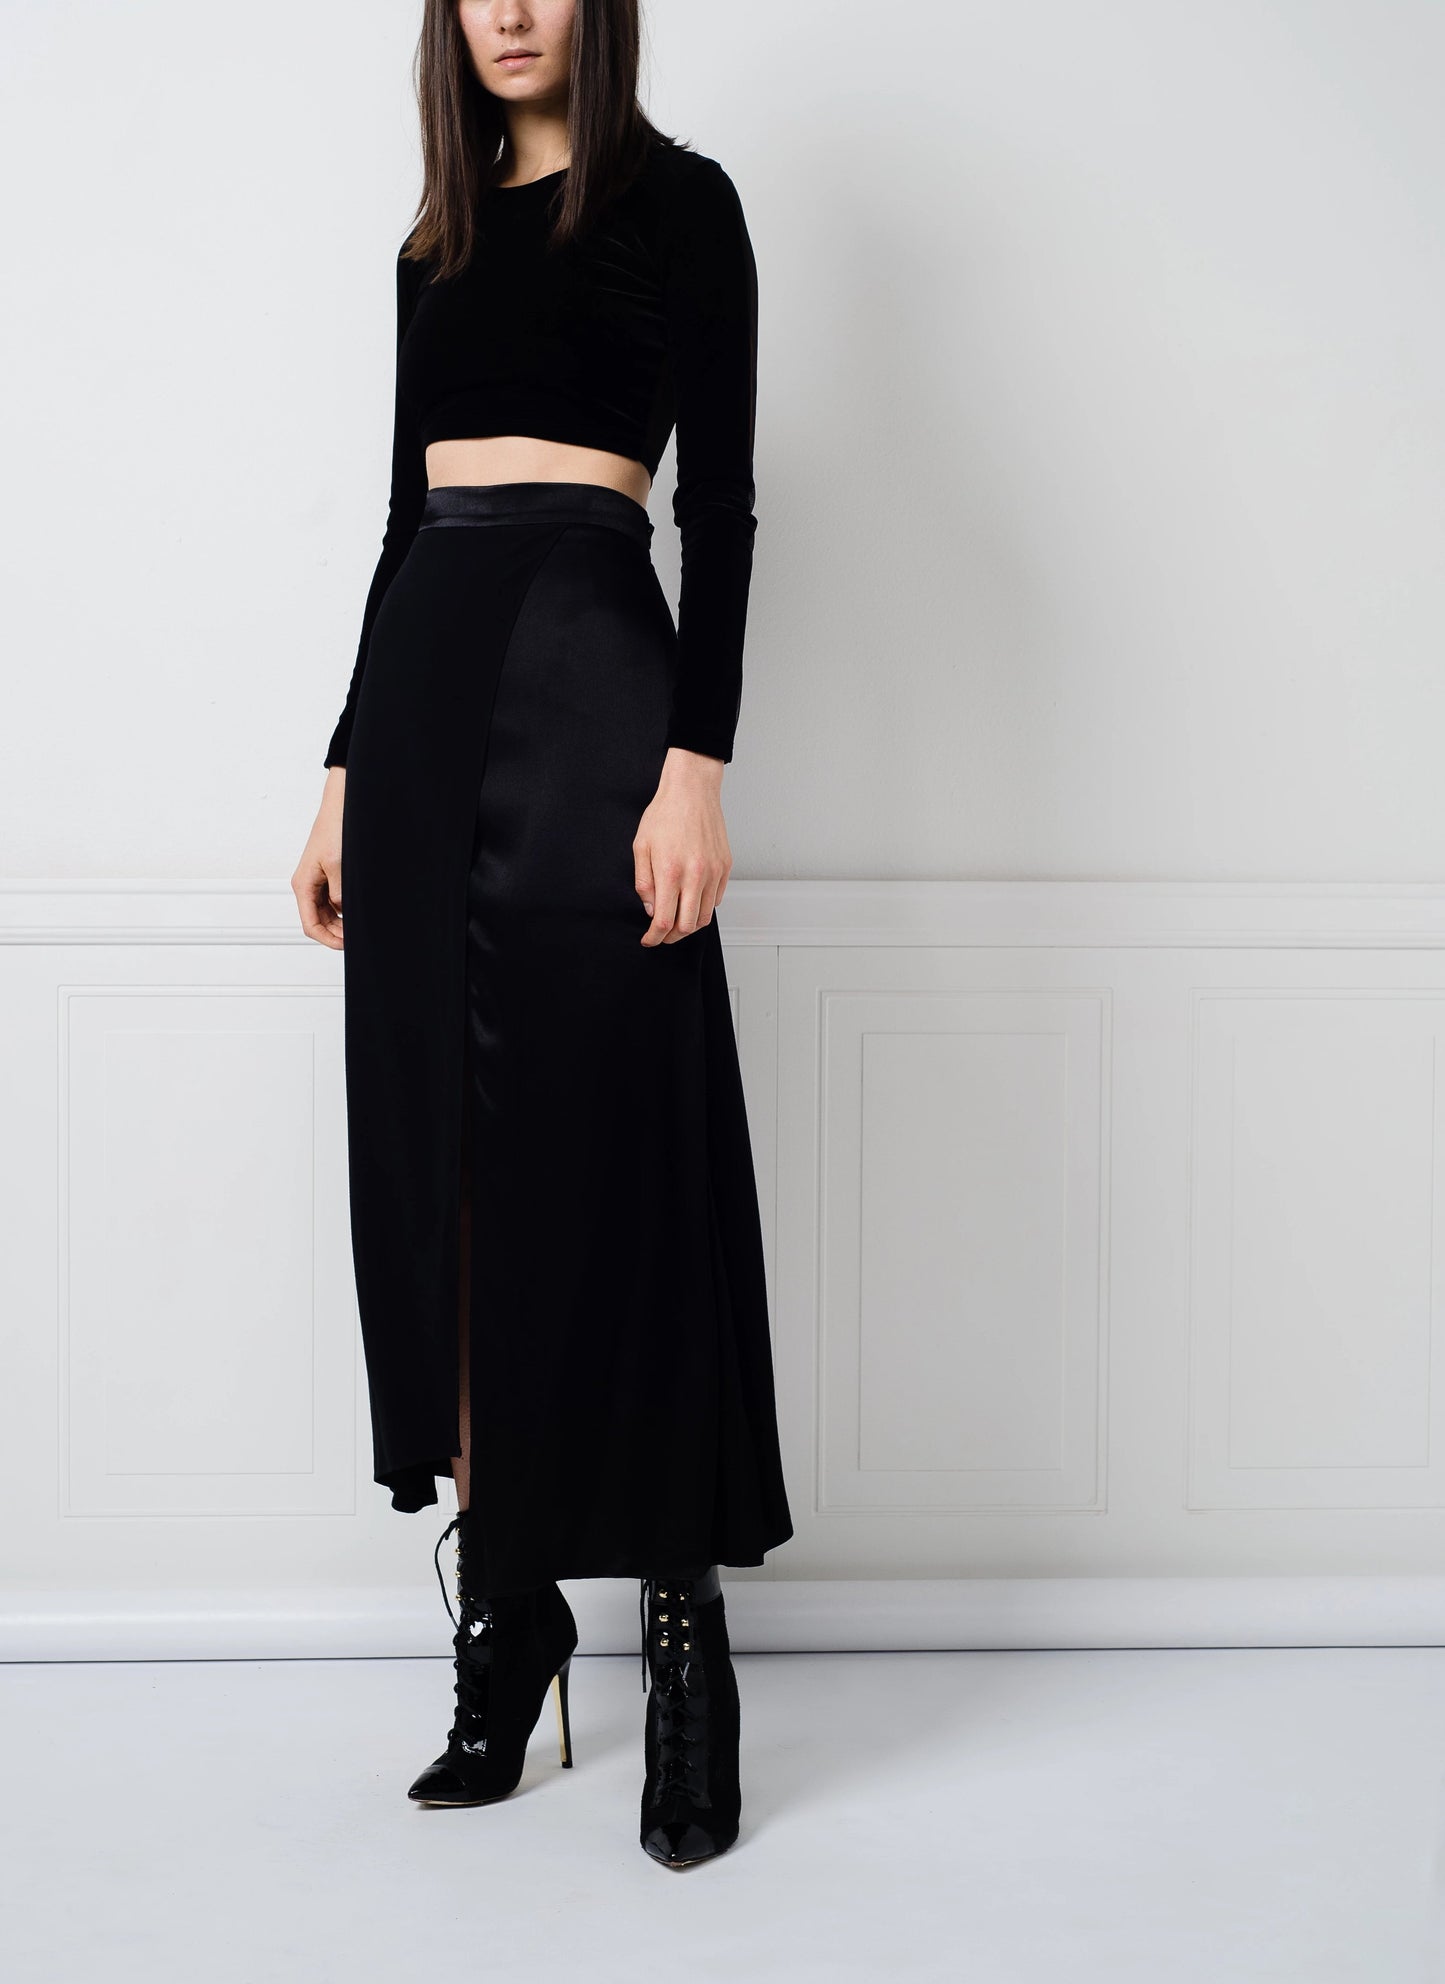 Maran Skirt in Black